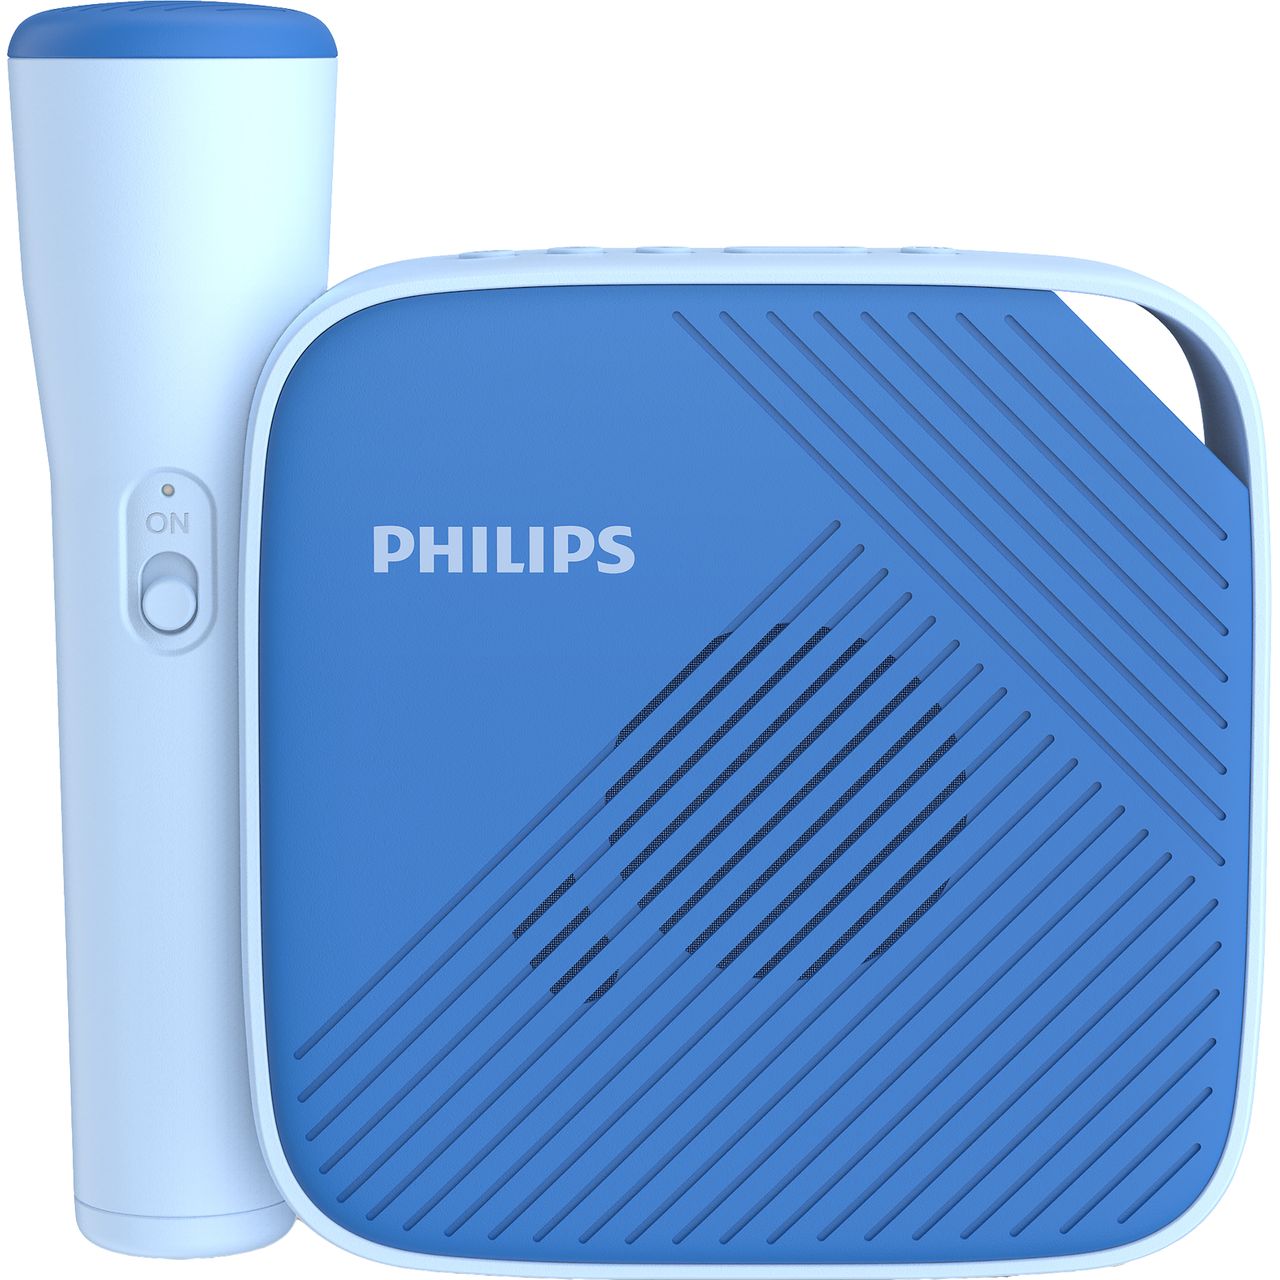 Philips Childrens Wireless Speaker specs